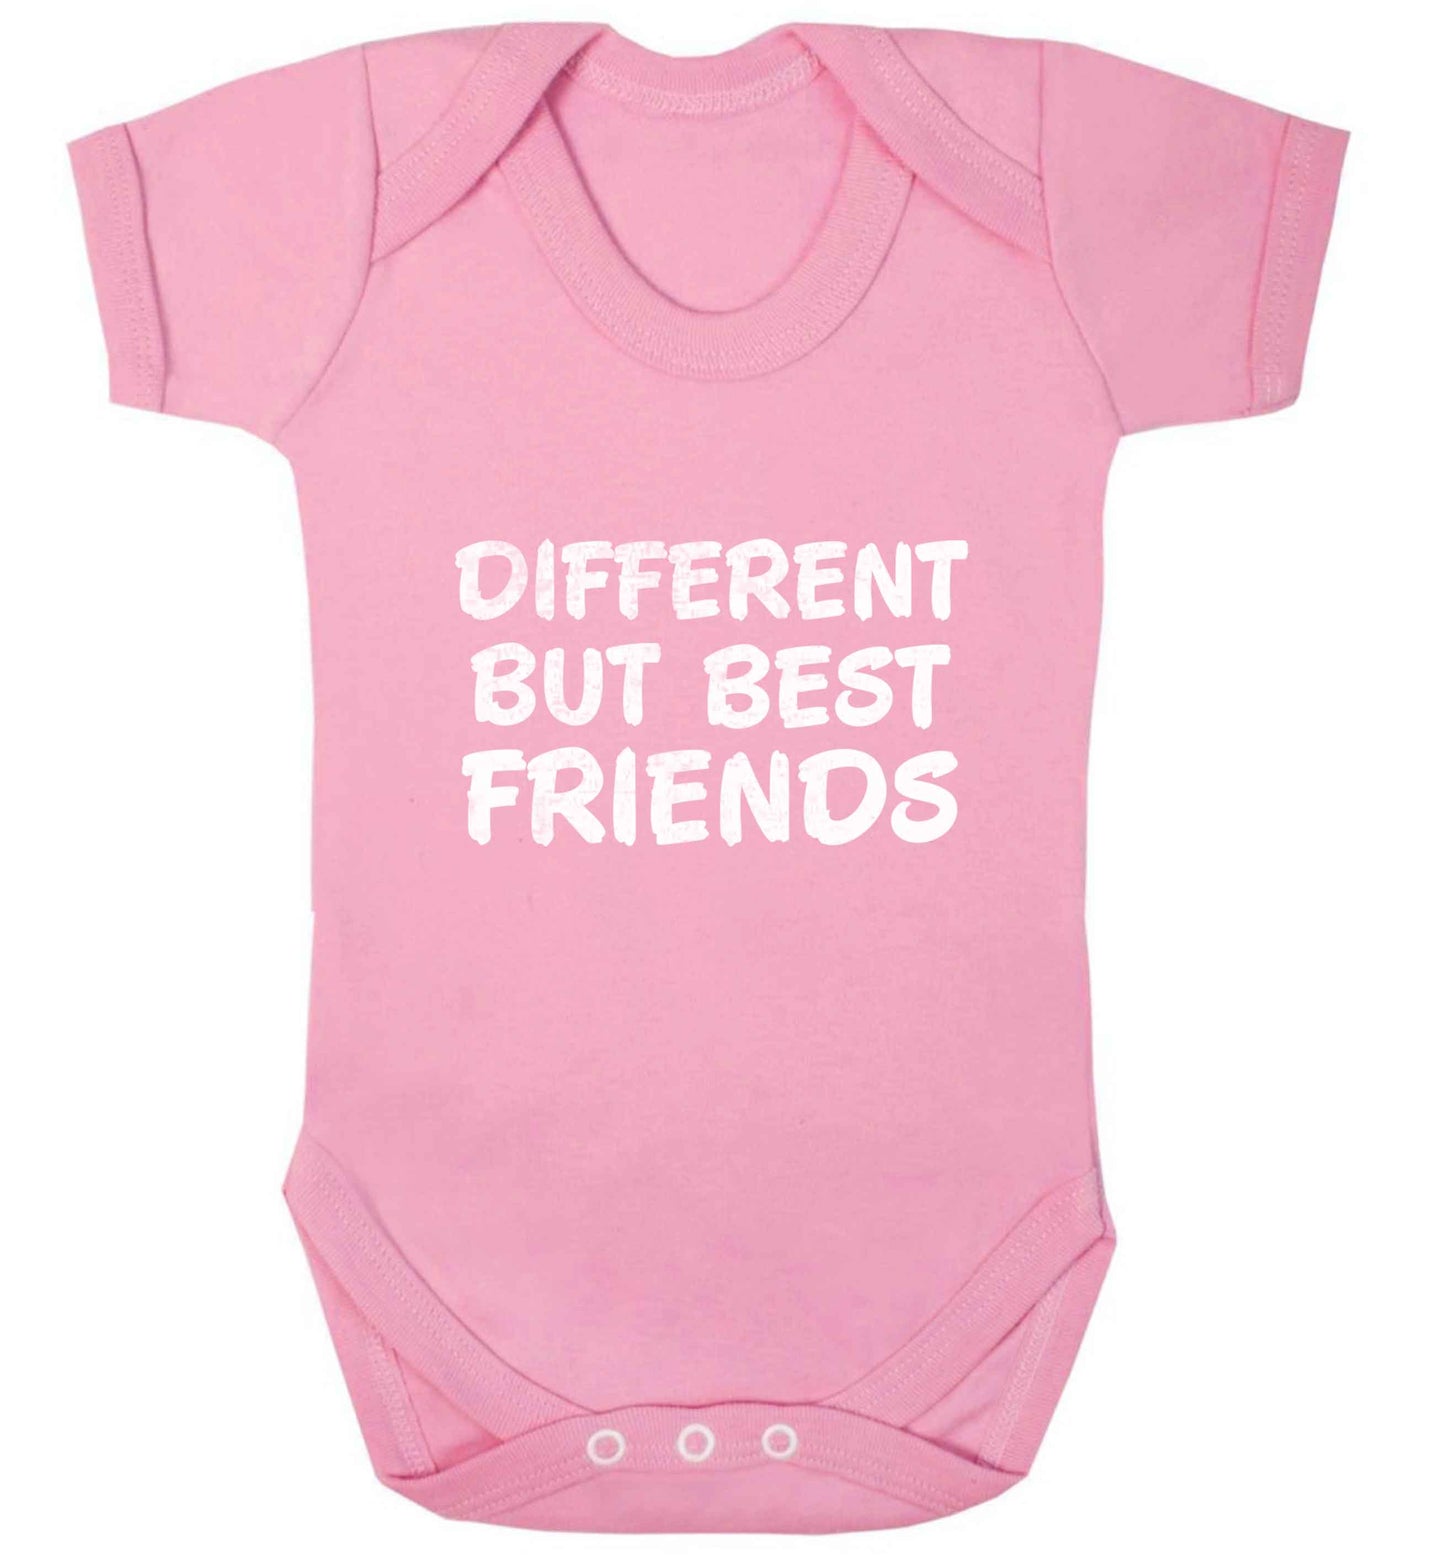 Different but best friends baby vest pale pink 18-24 months